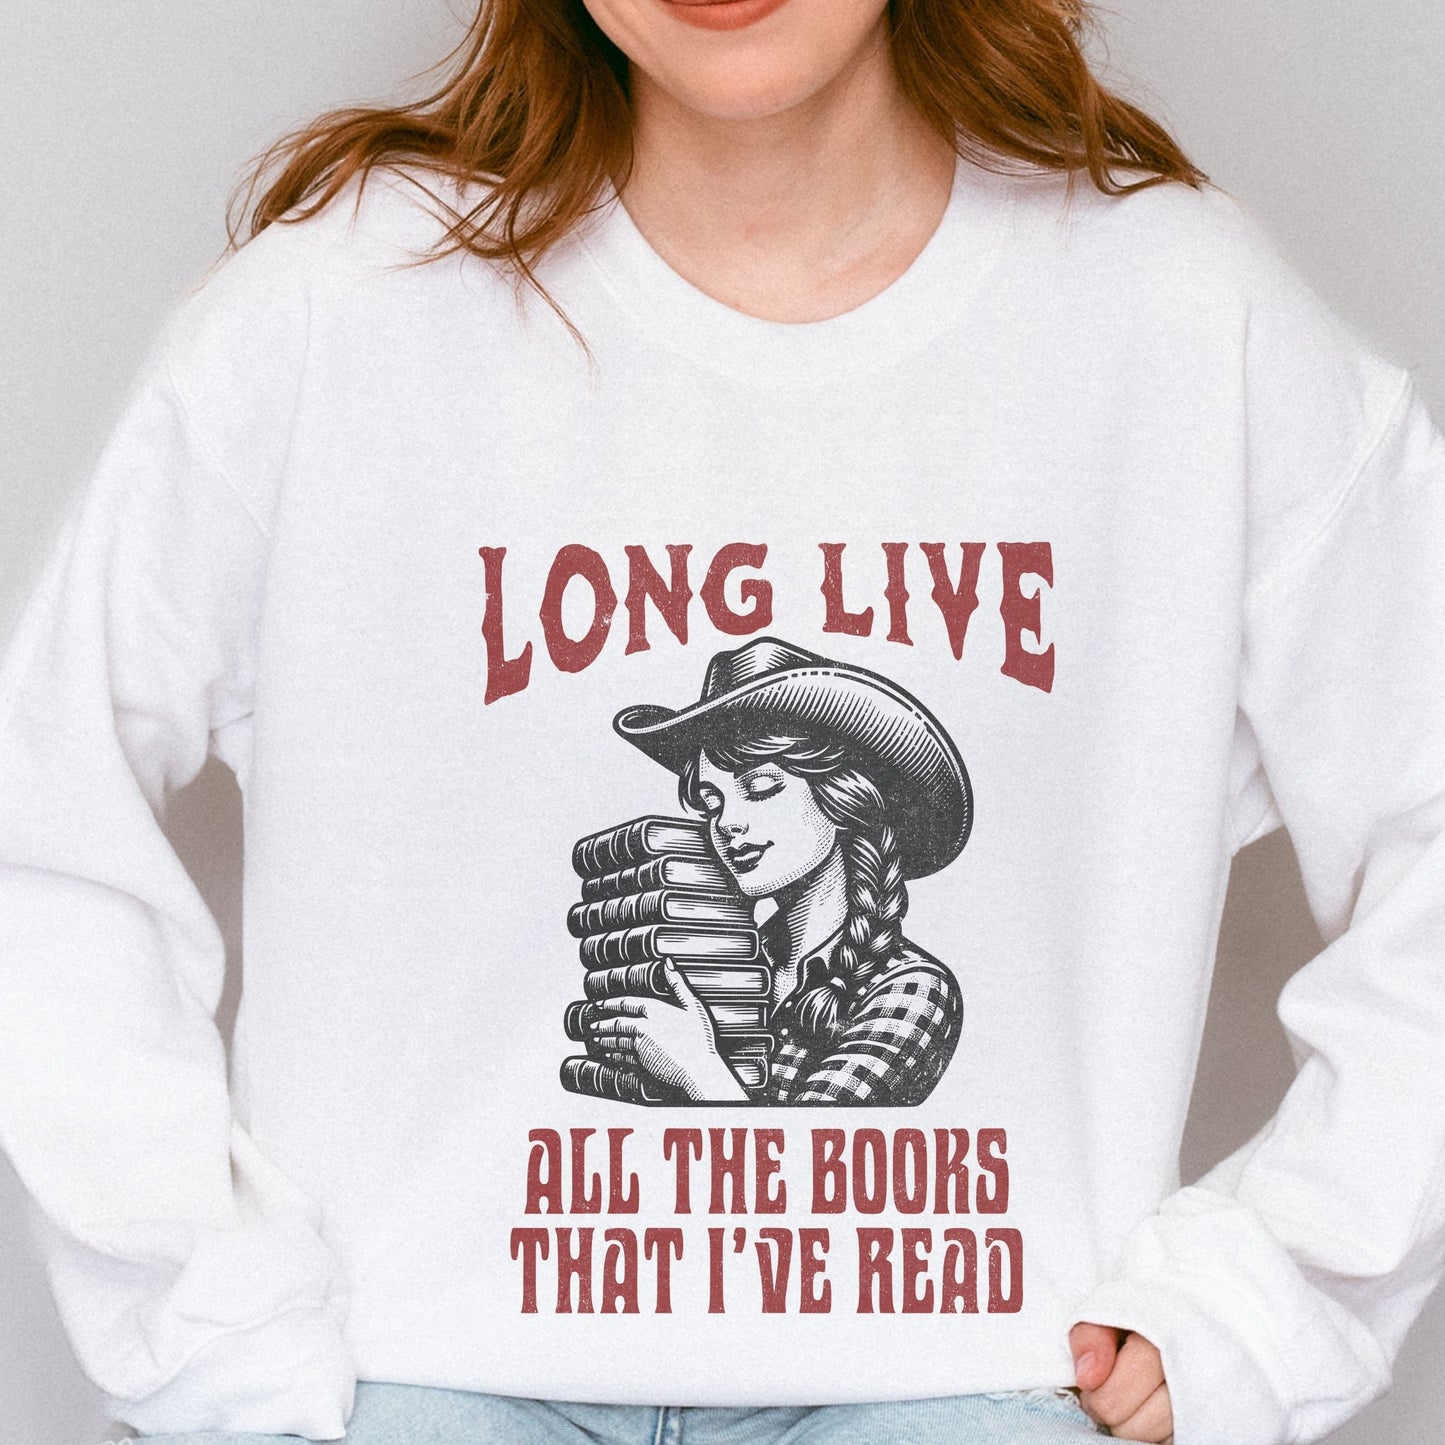 Long Live Books Cowgirl Book Sweater Bookish Shirt Western Book Lover Sweatshirt Reading Sweatshirt Romance Reader Book Themed Gifts Apparel